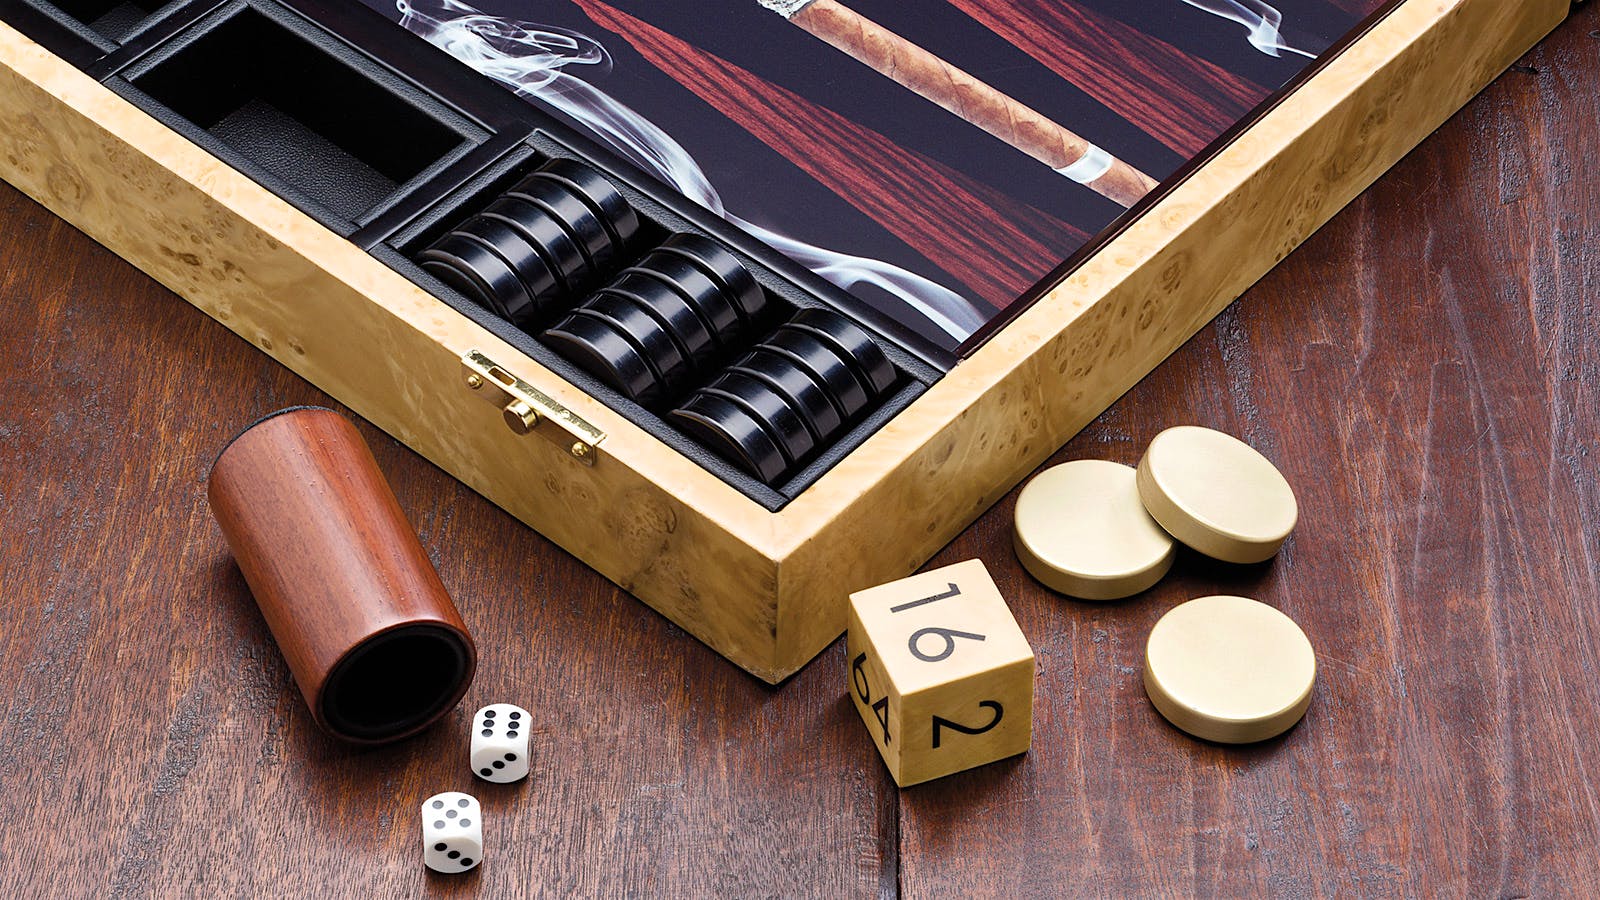 Luxe Poker Set Smoke